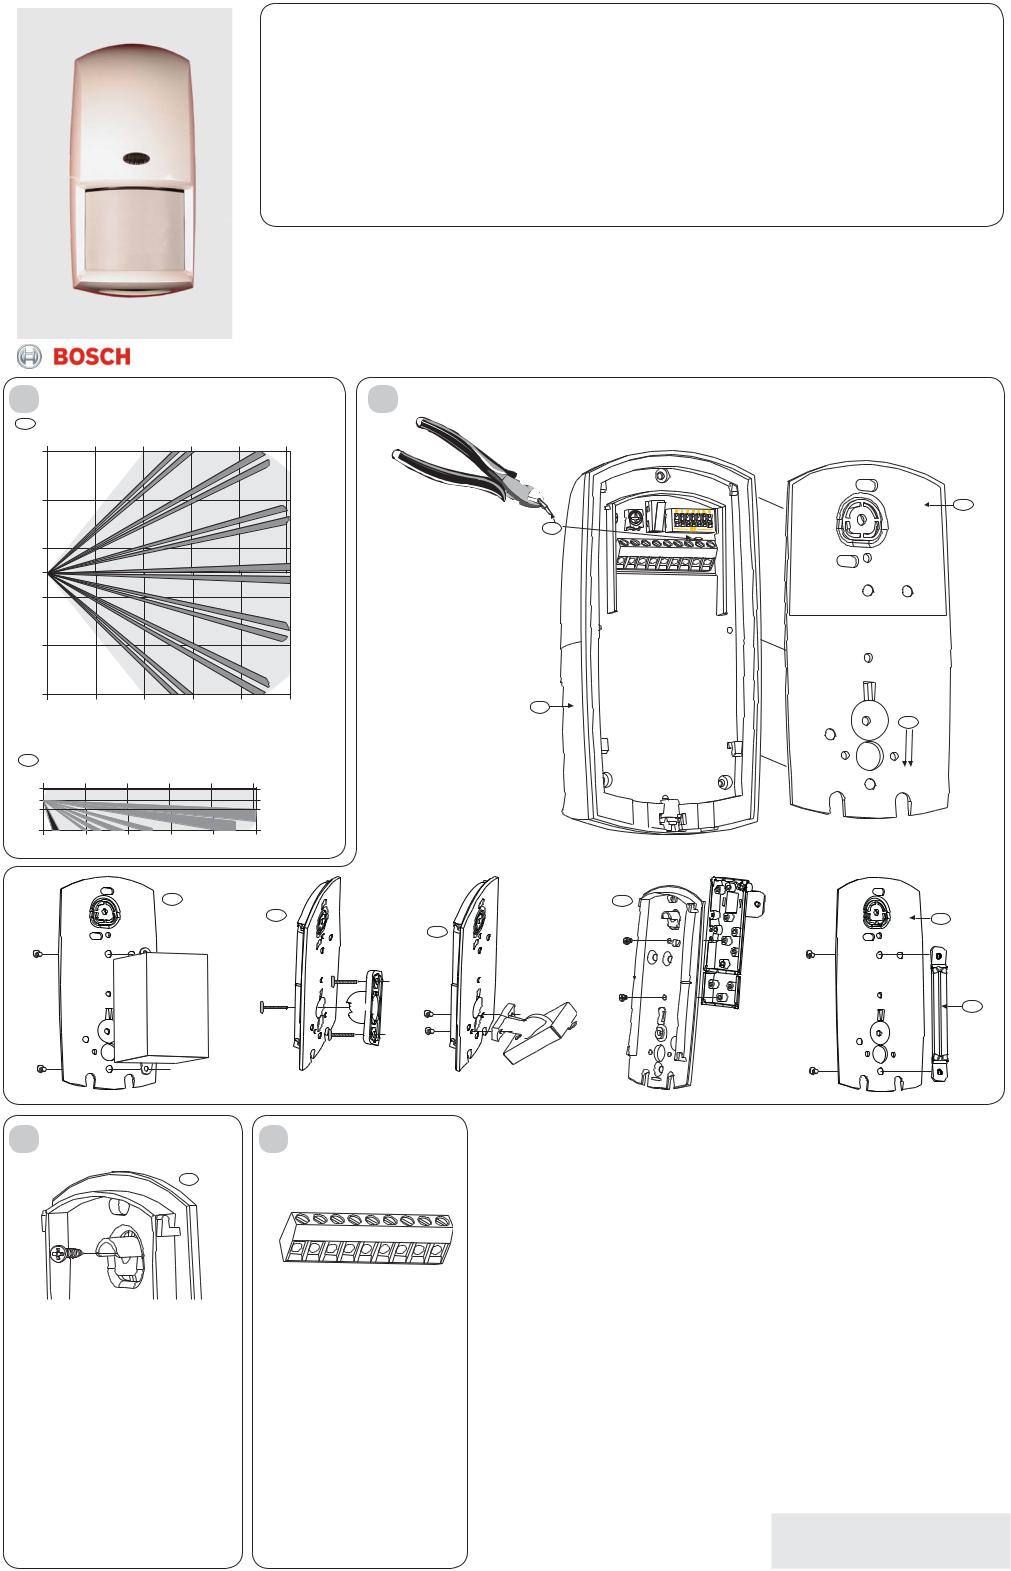 Bosch OD850-F1 Installation Manual